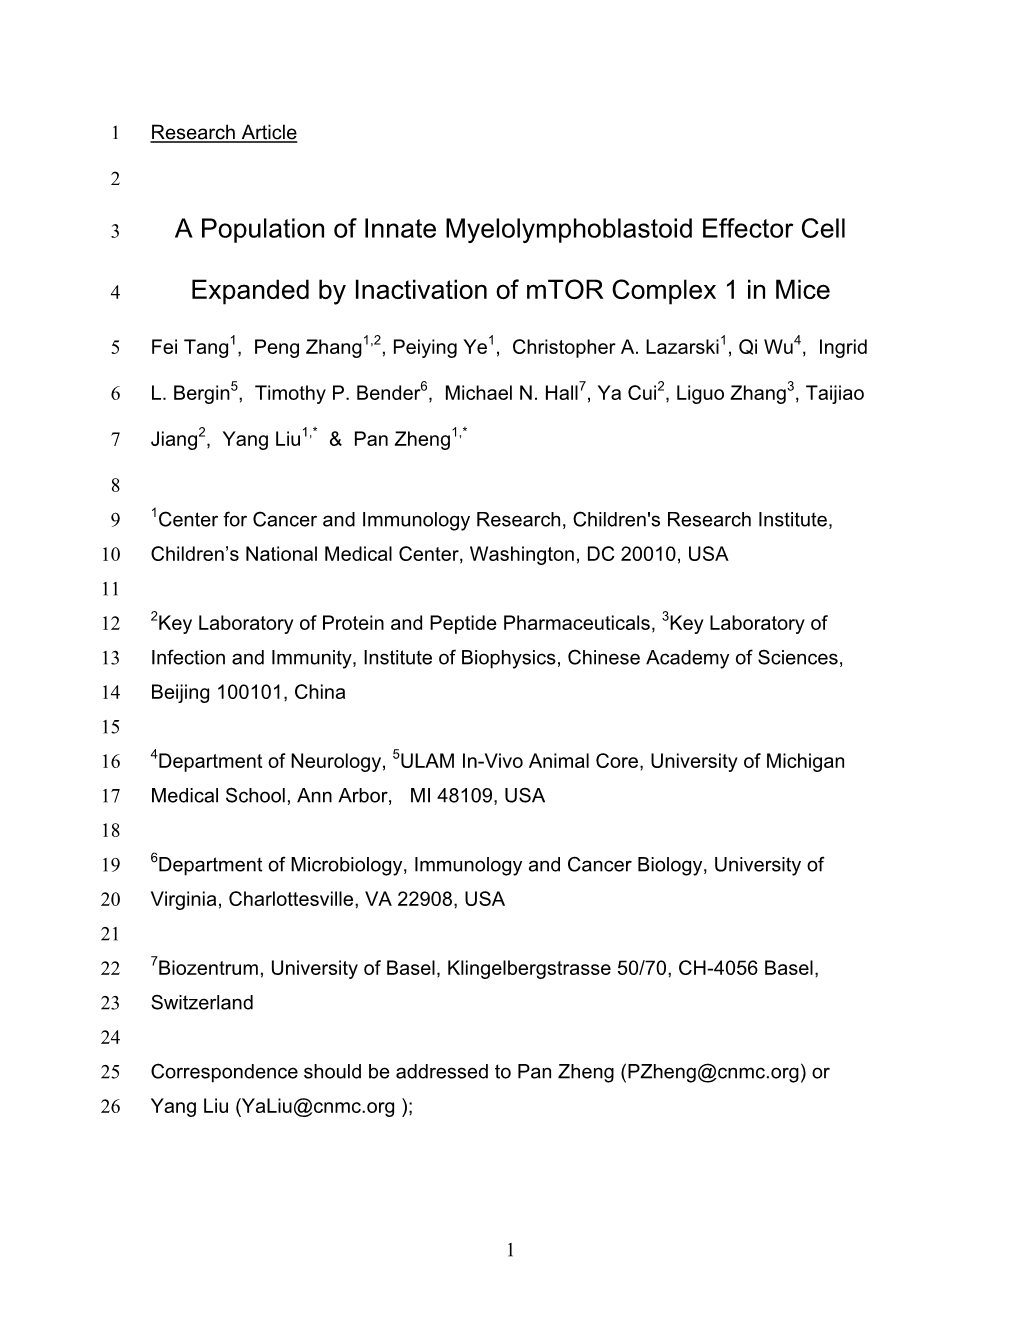 A Population of Innate Myelolymphoblastoid Effector Cell